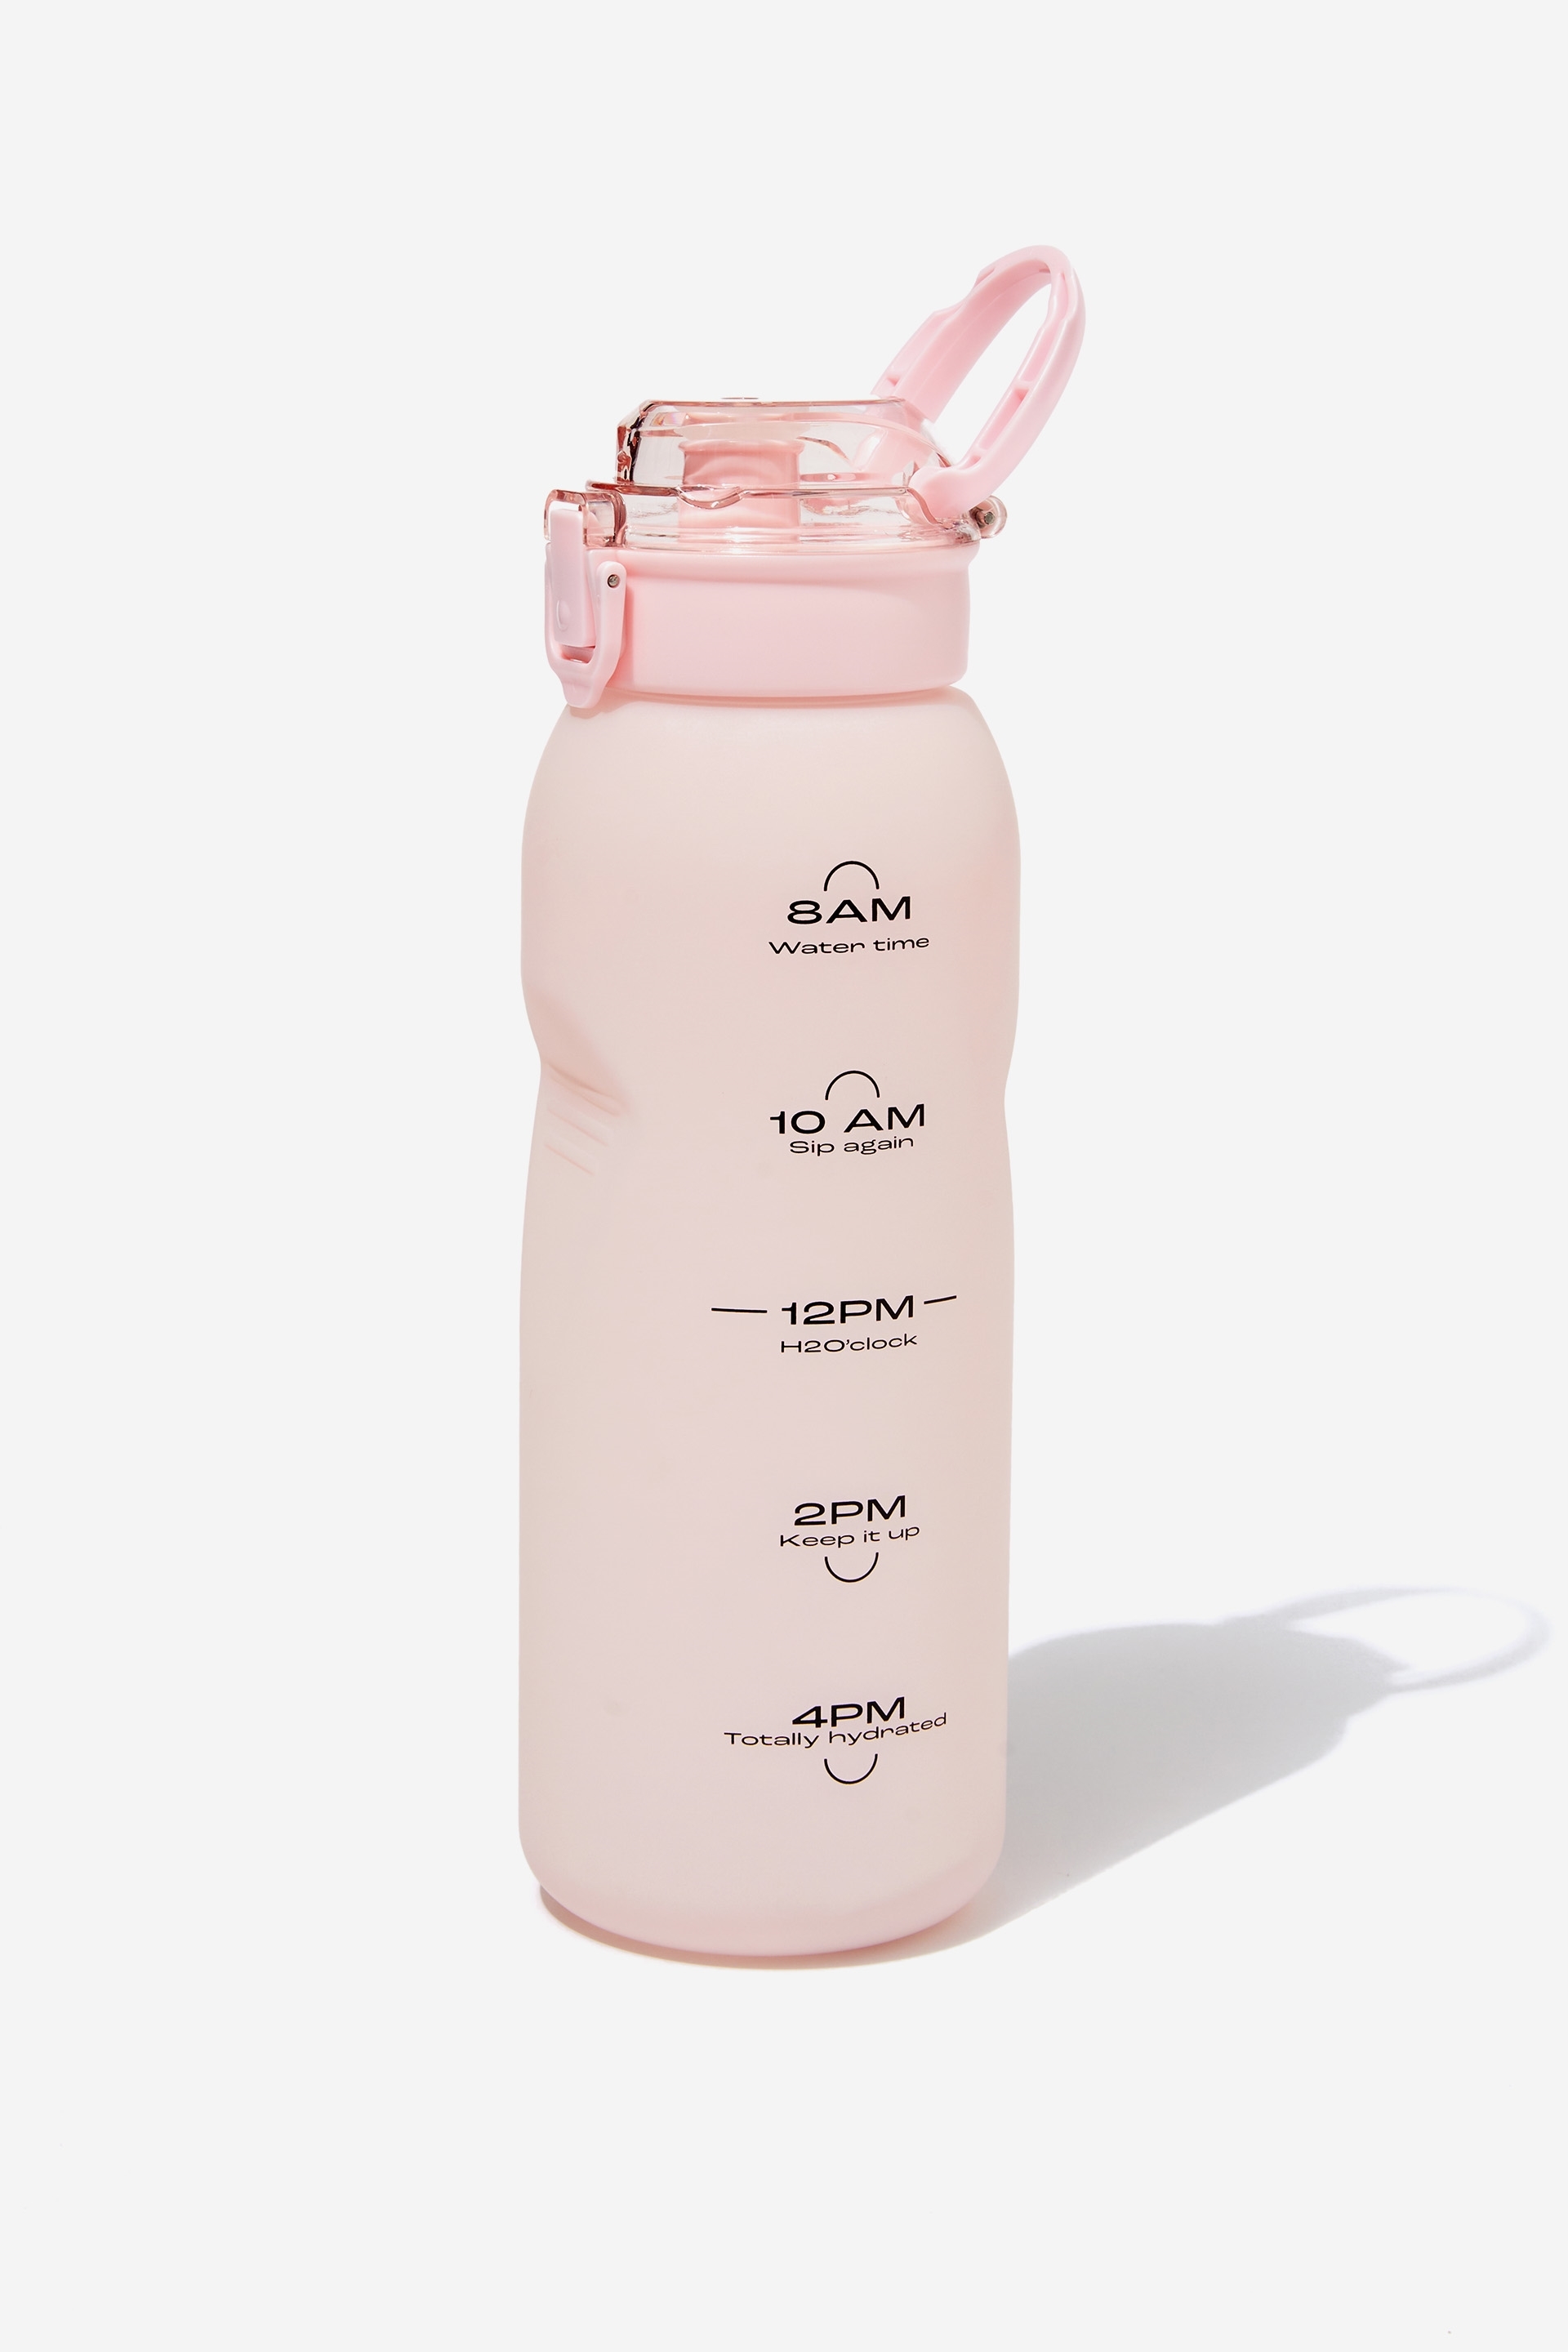 Typo - Heavy Lifter 1.5 L Drink Bottle - Matte ballet blush